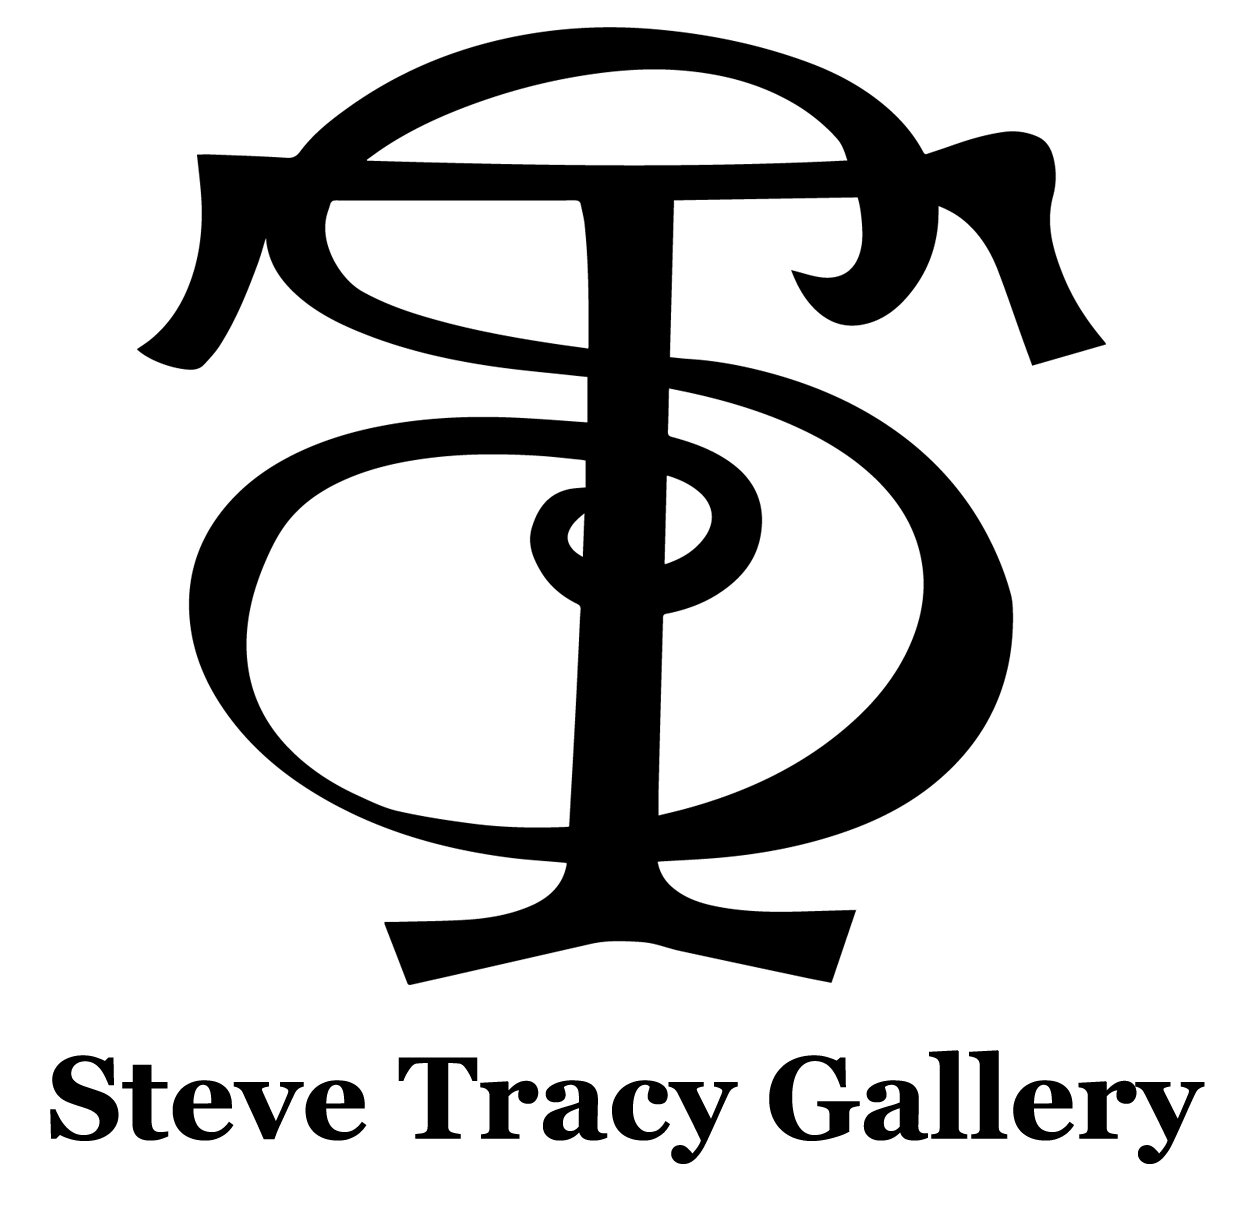 Steve Tracy Gallery